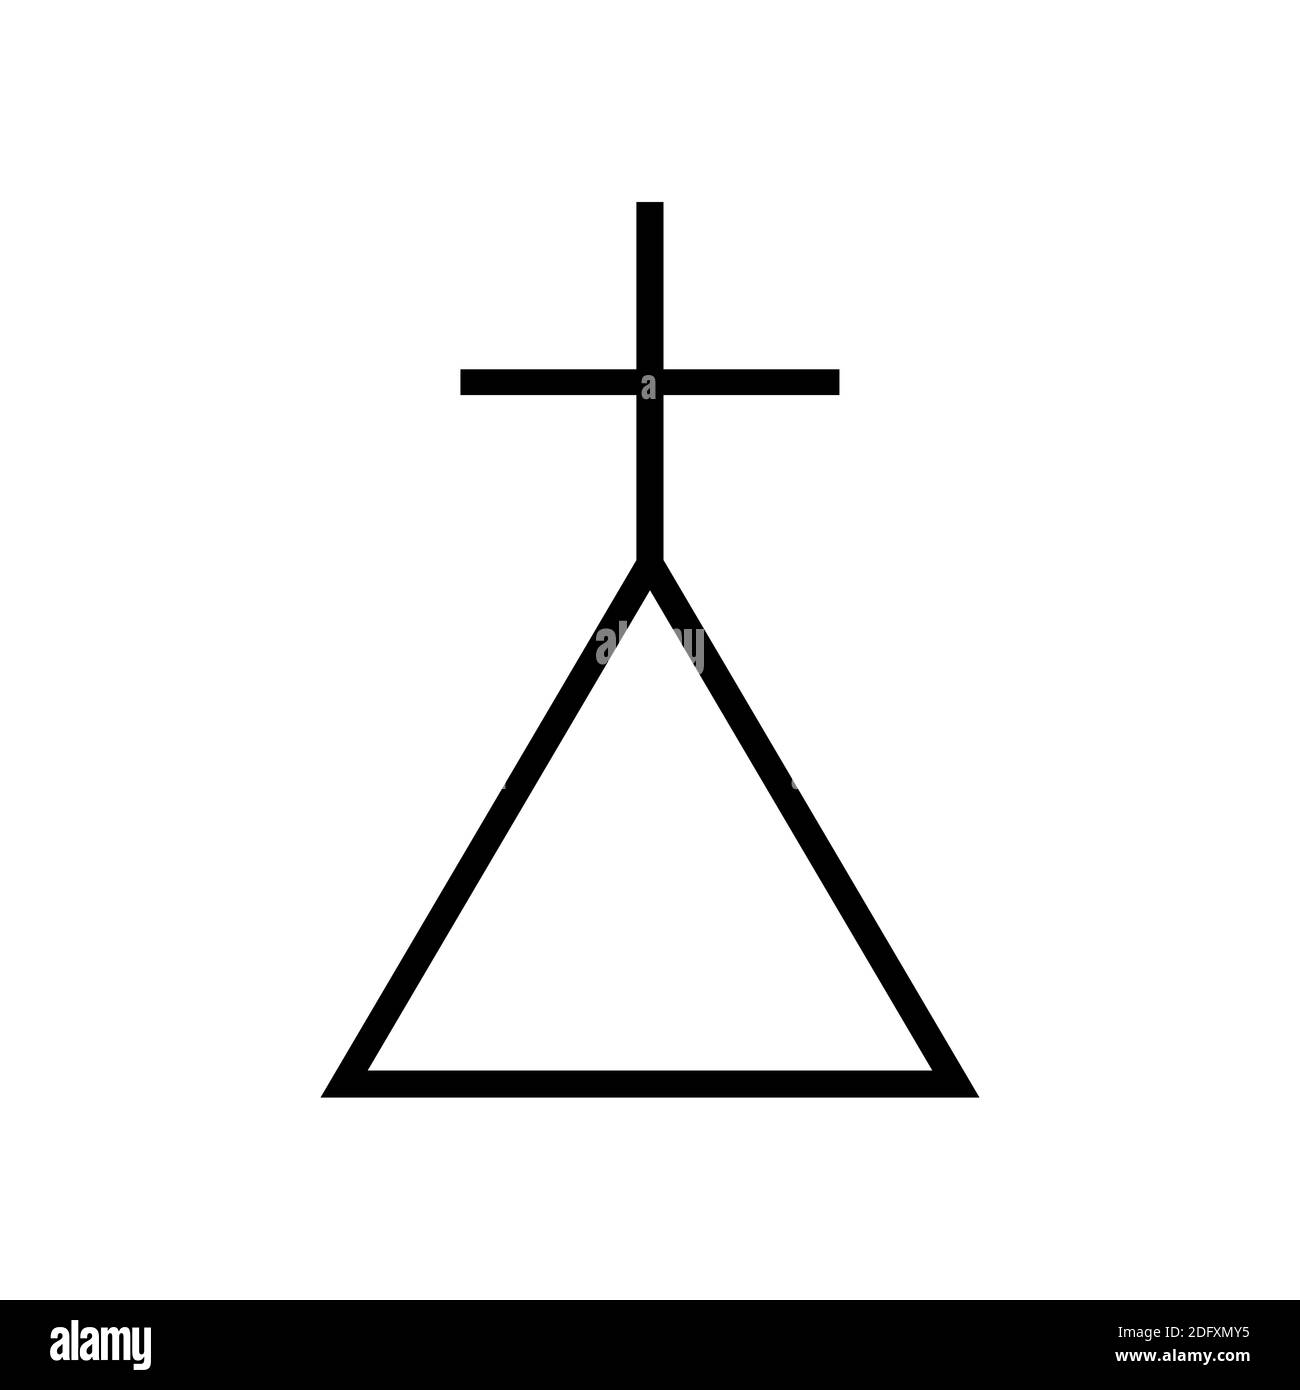 the symbol of the phosphorus, one of the symbols of alchemy. Black and white phosphorus icon. Stock Photo